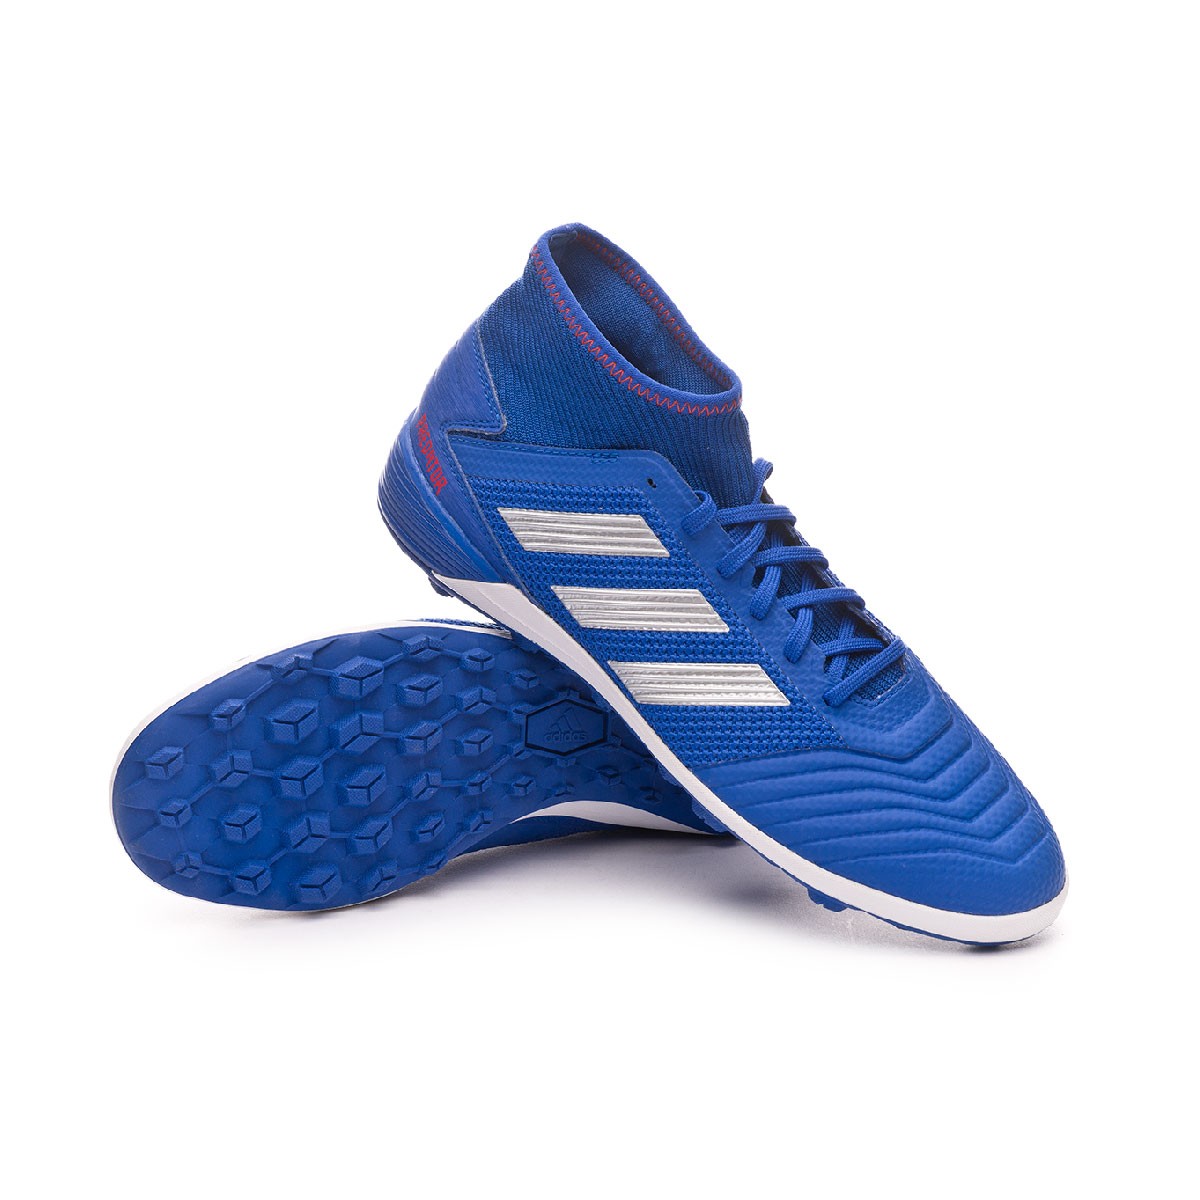 Football Boot adidas Predator Tango 19.3 Turf Bold blue-Silver  metallic-Active red - Football store Fútbol Emotion